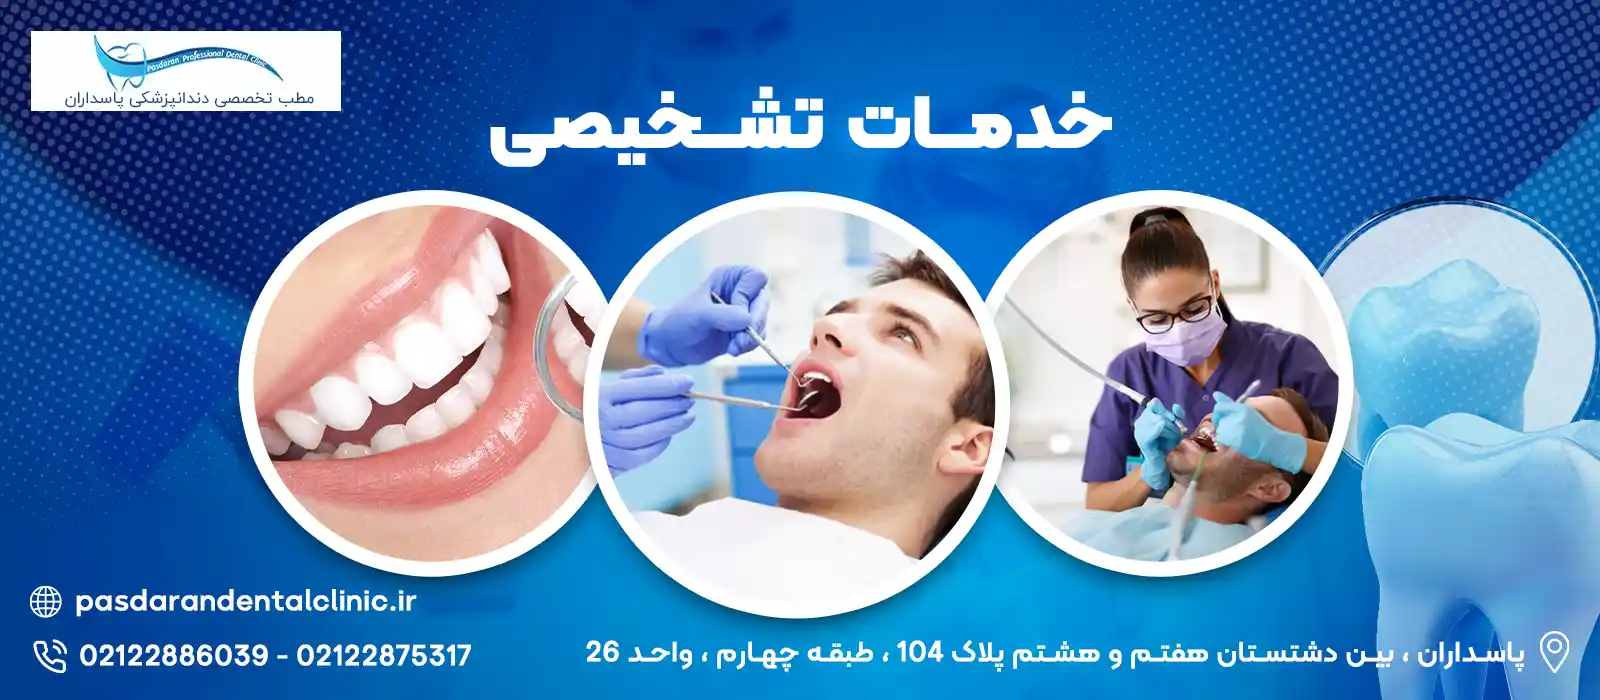 Dental diagnostic services in Tehran